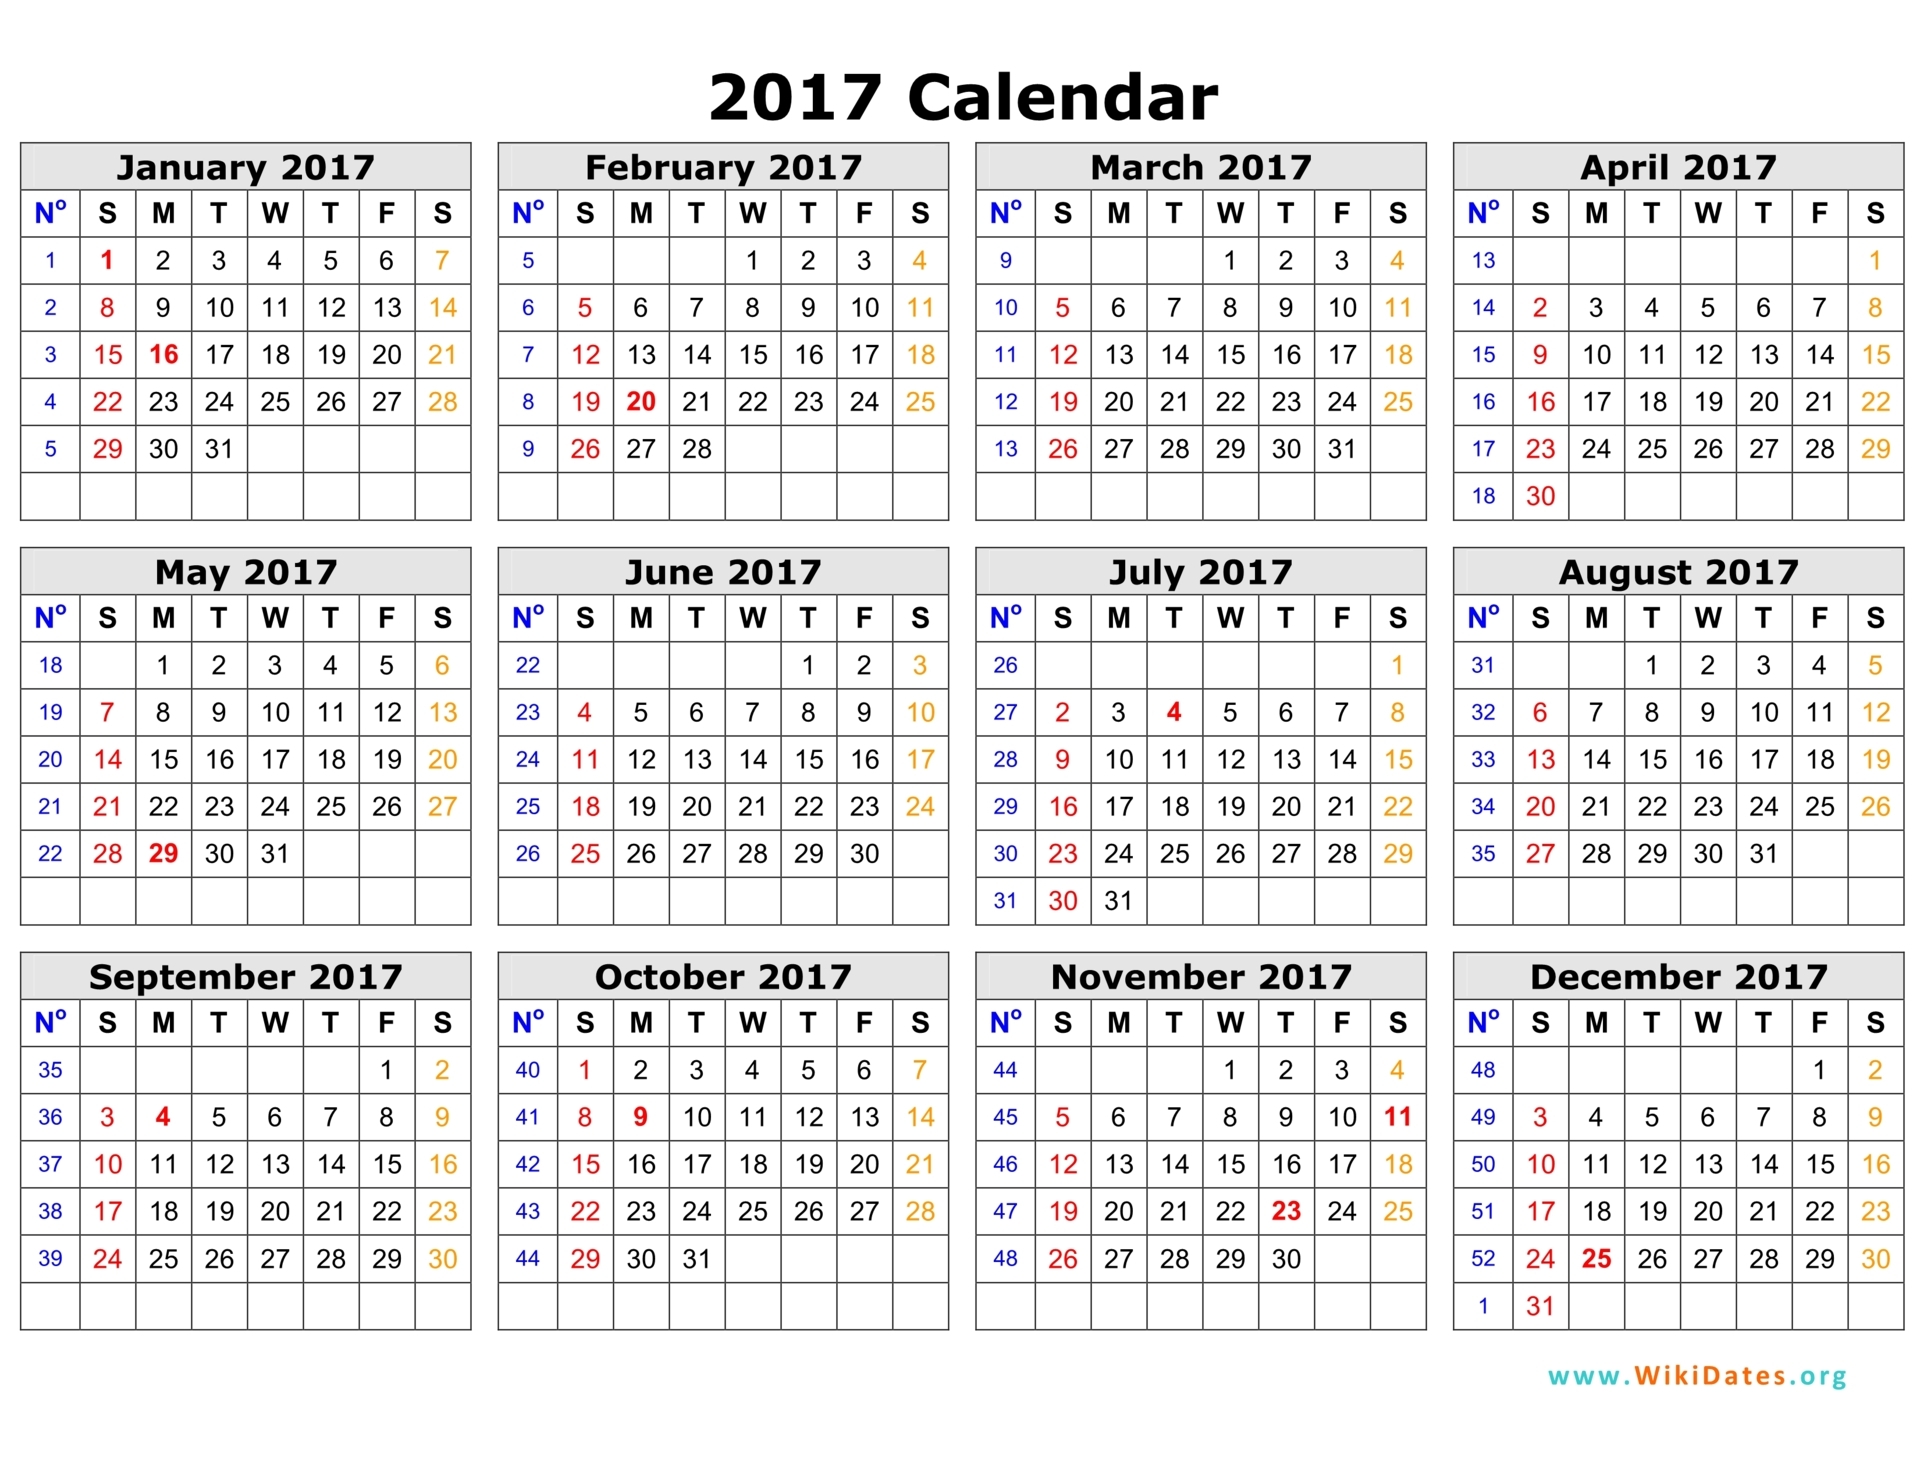 2017 Calendar In Word | 2017 calendar with holidays